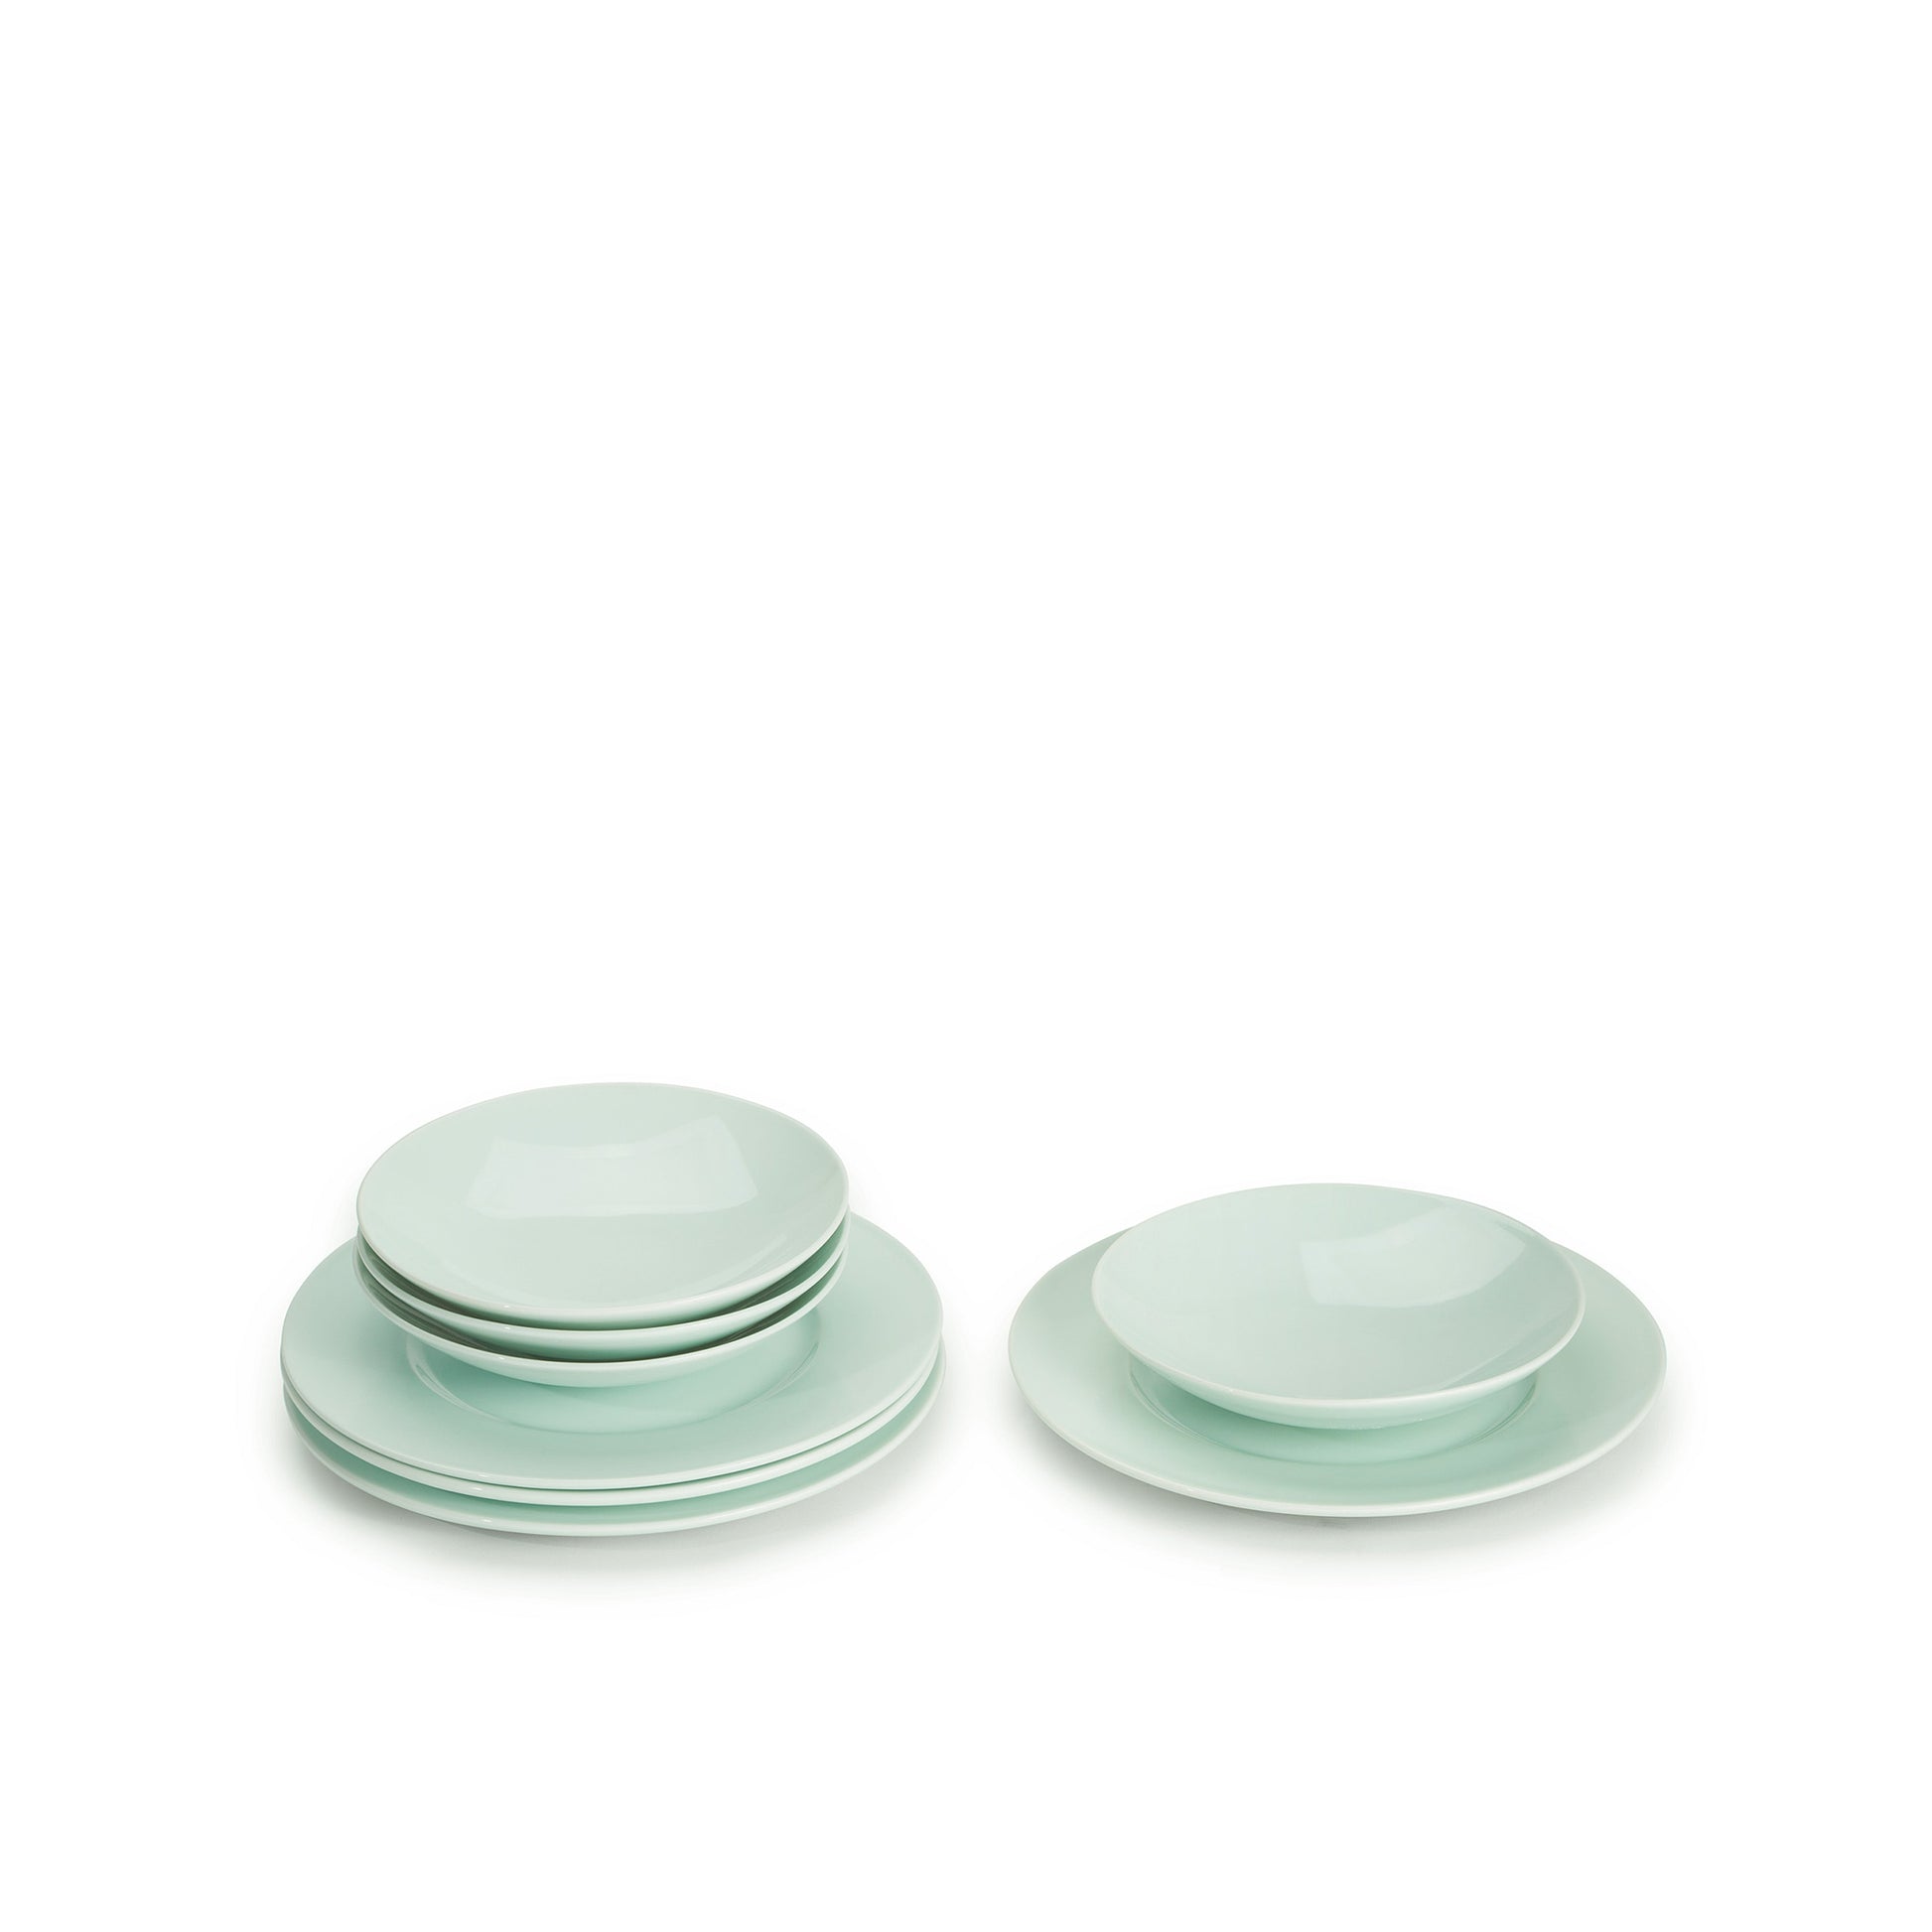 8 piece green celadon porcelain dinnerware set, 11 3/4" wide rim dinner plates, 8" salad/soup bowls, media 2 of 6